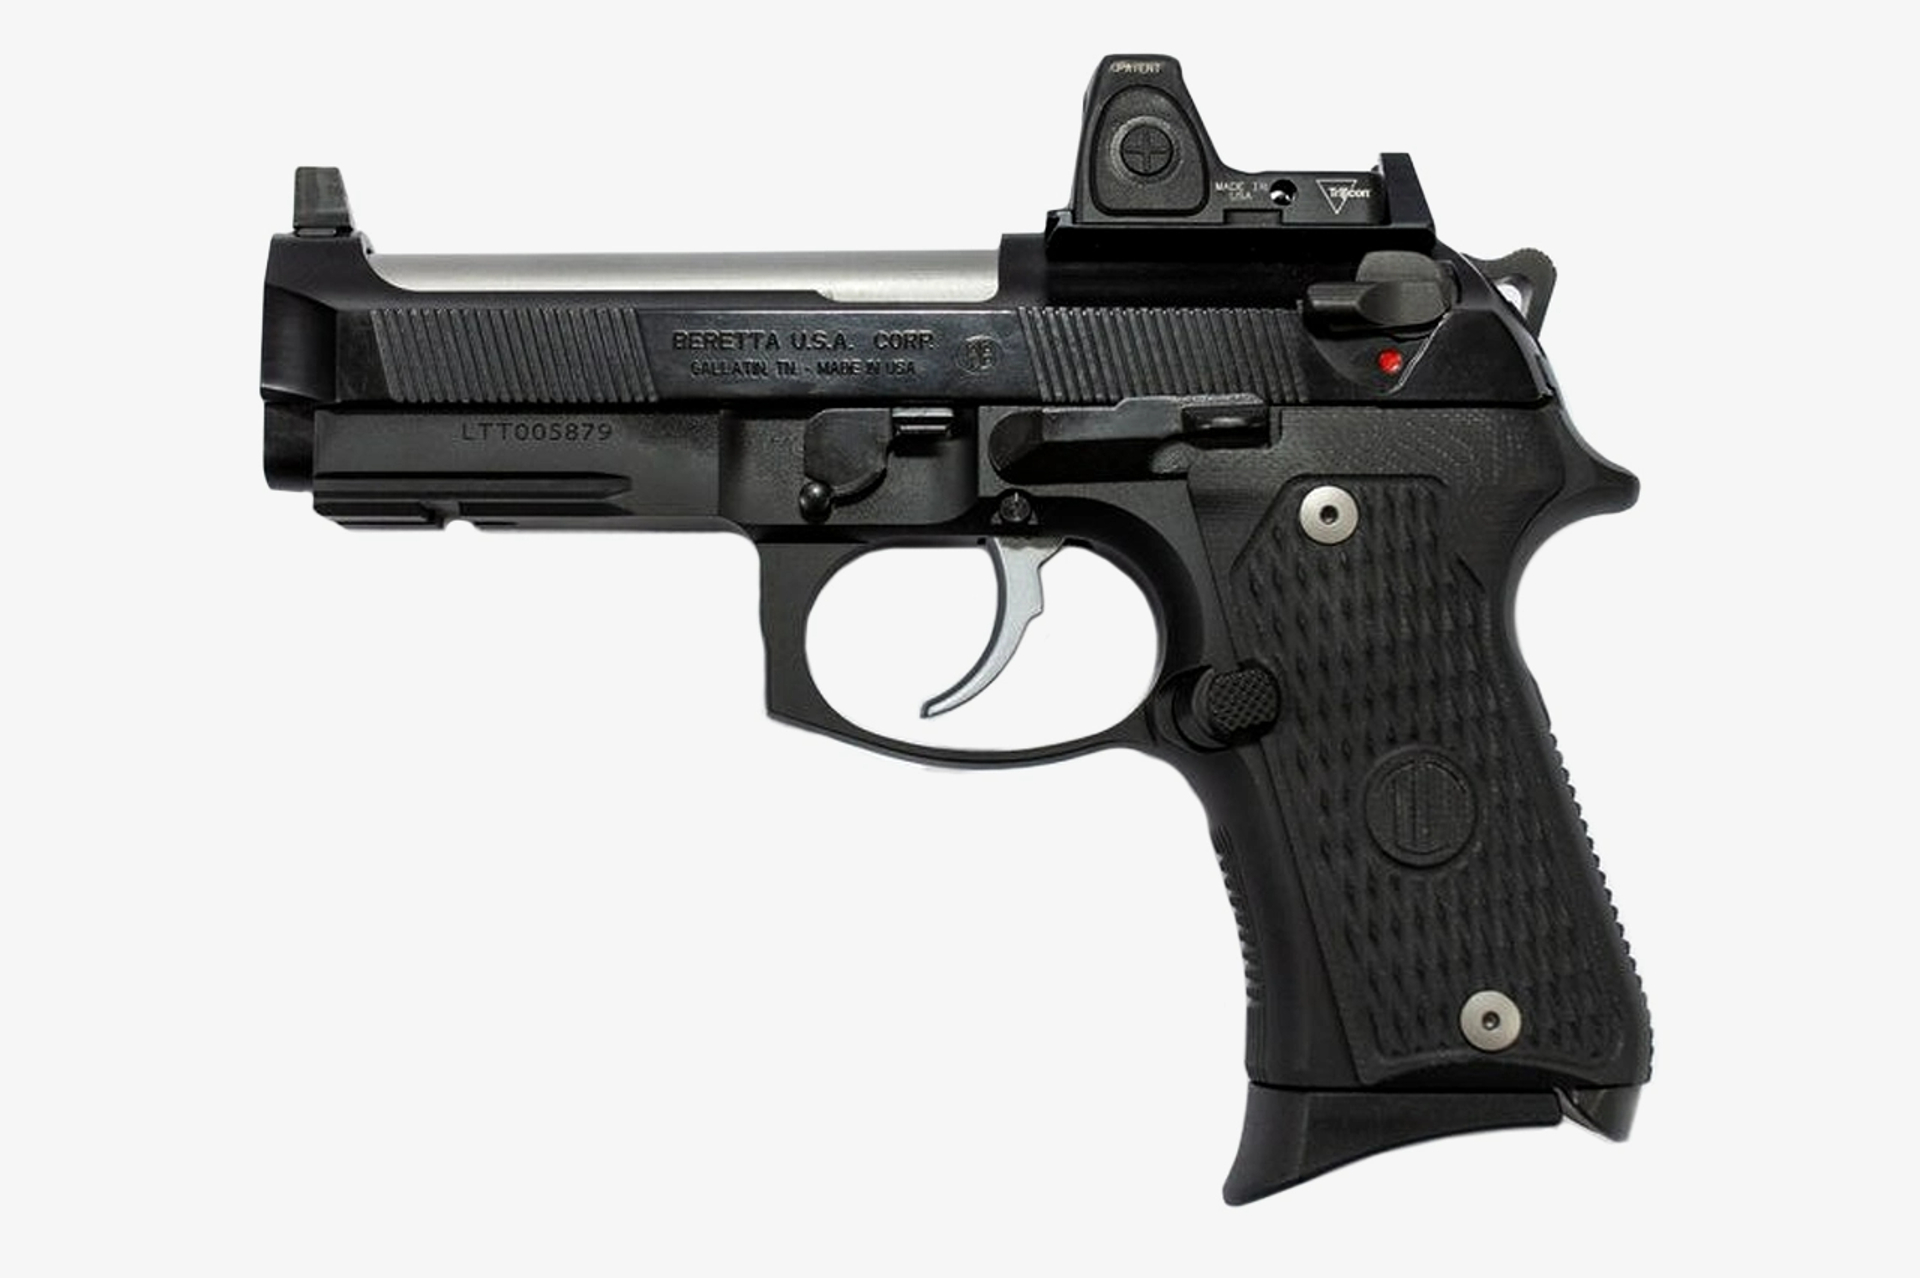 The Beretta 92 Family of Handguns - Inside Safariland